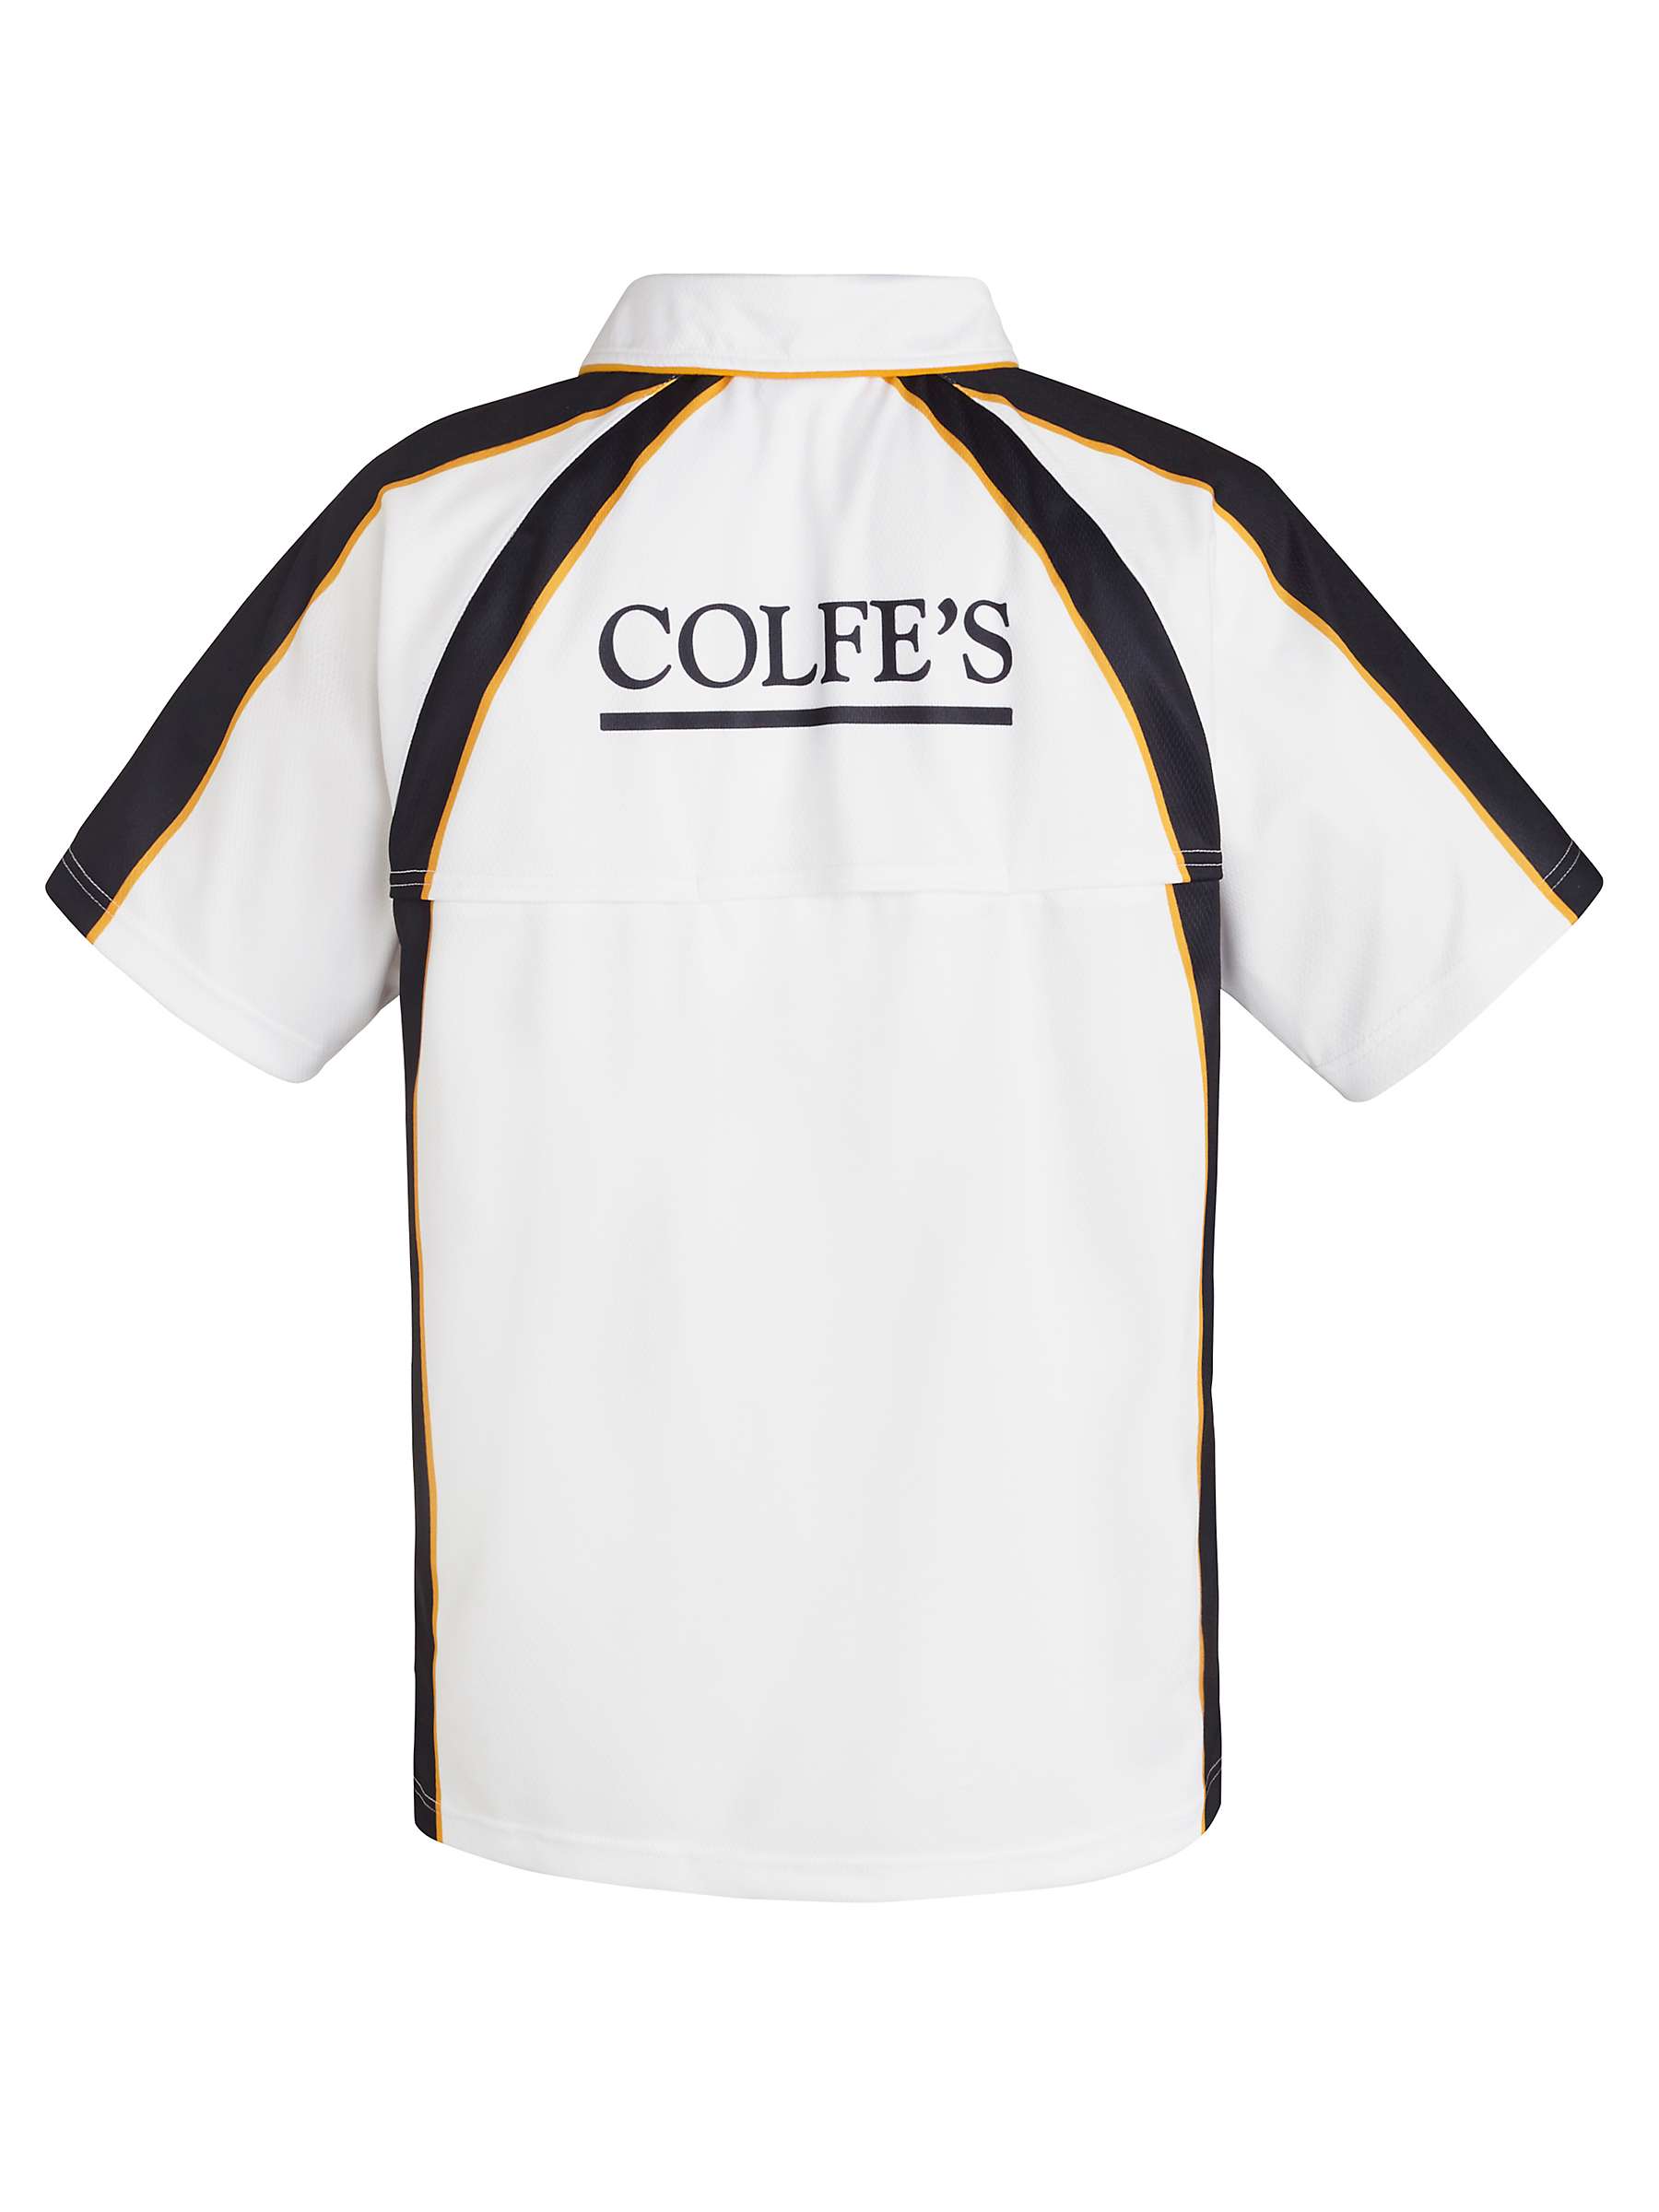 Buy Colfe's School Unisex Cricket Shirt, White/Multi Online at johnlewis.com